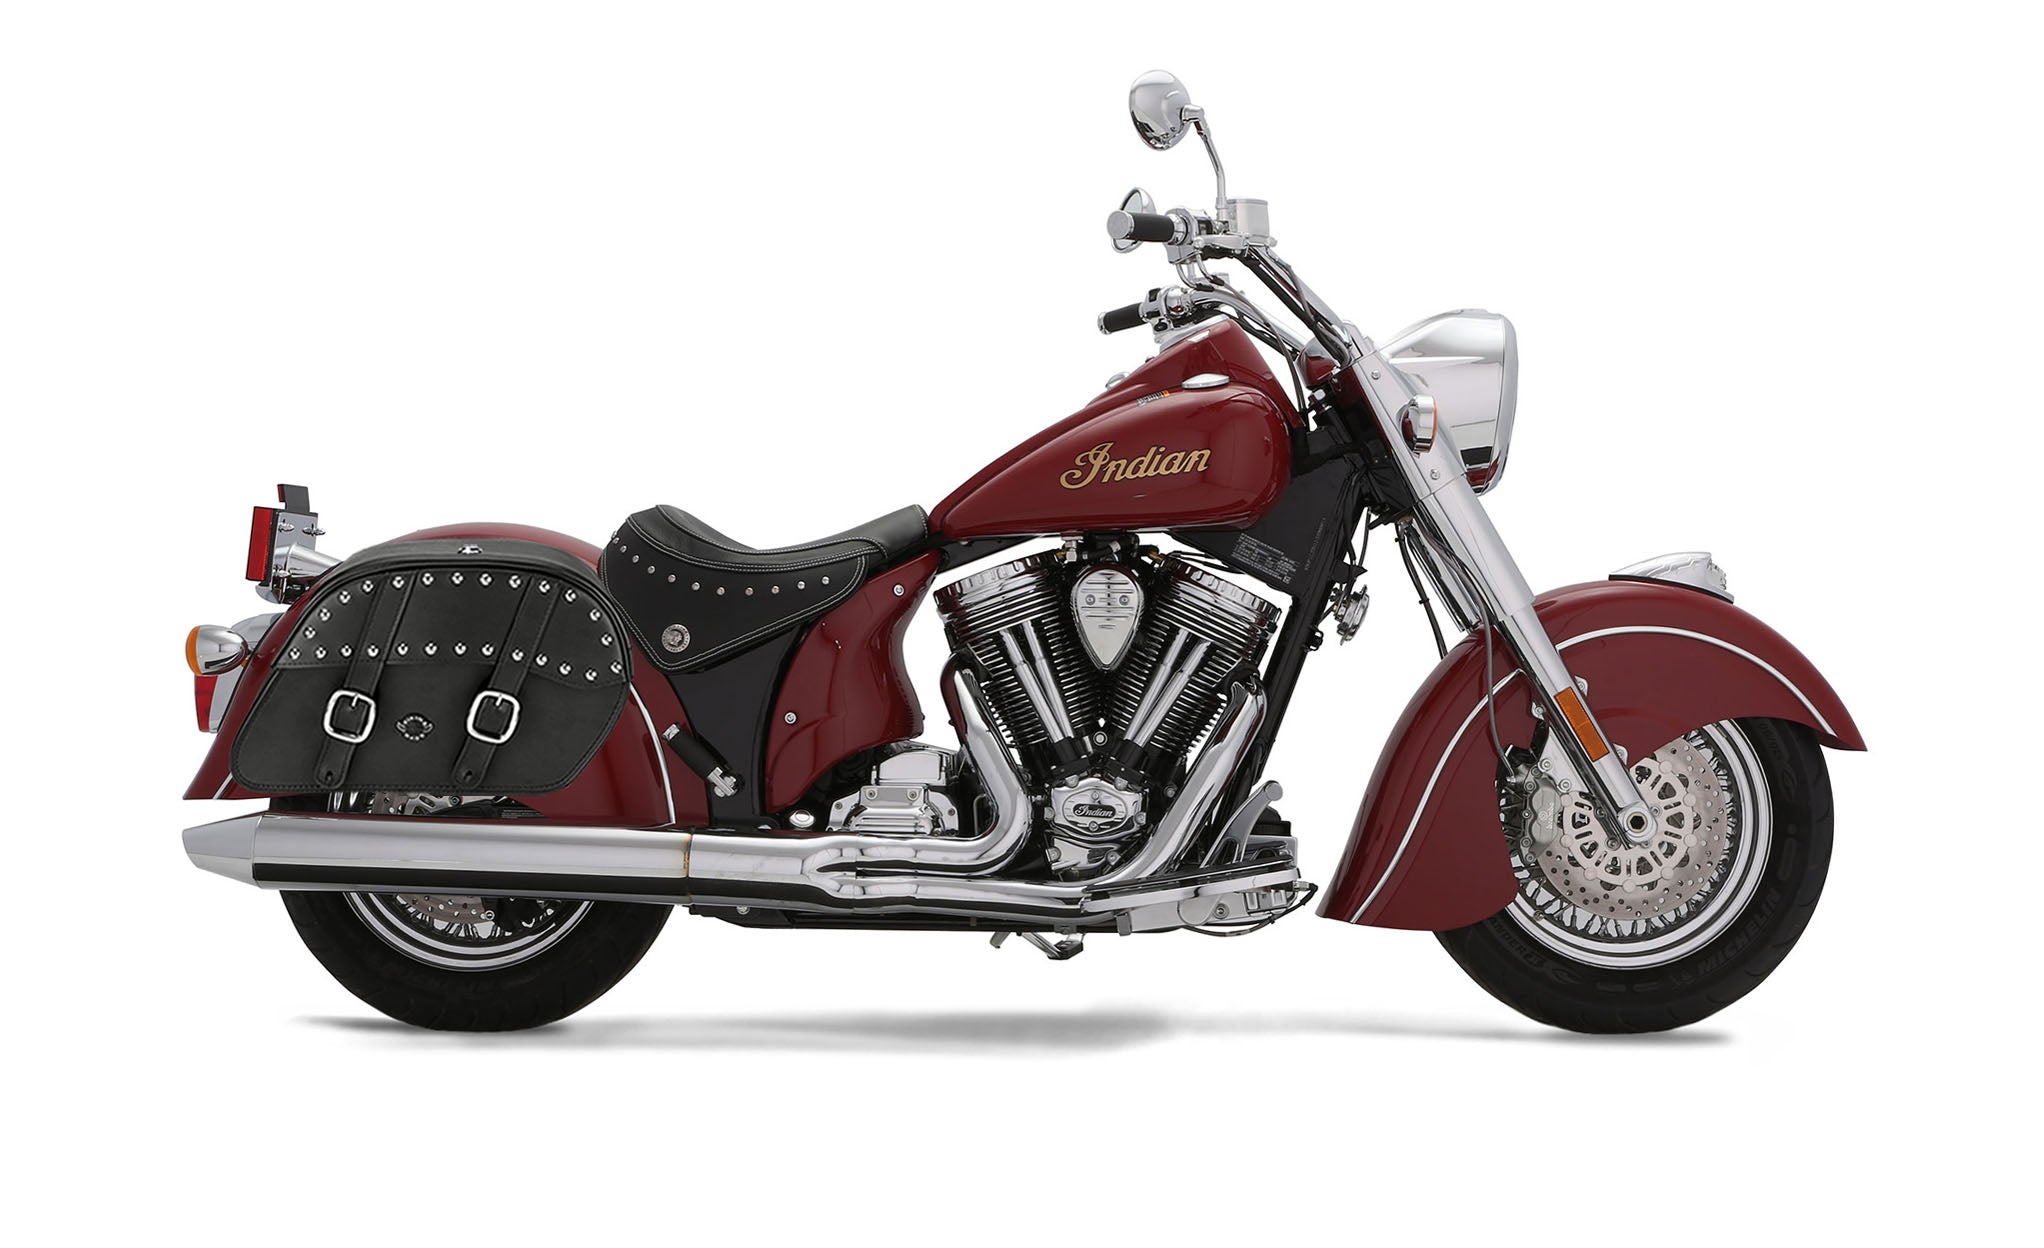 Viking Skarner Large Indian Chief Deluxe Leather Studded Motorcycle Saddlebags on Bike Photo @expand